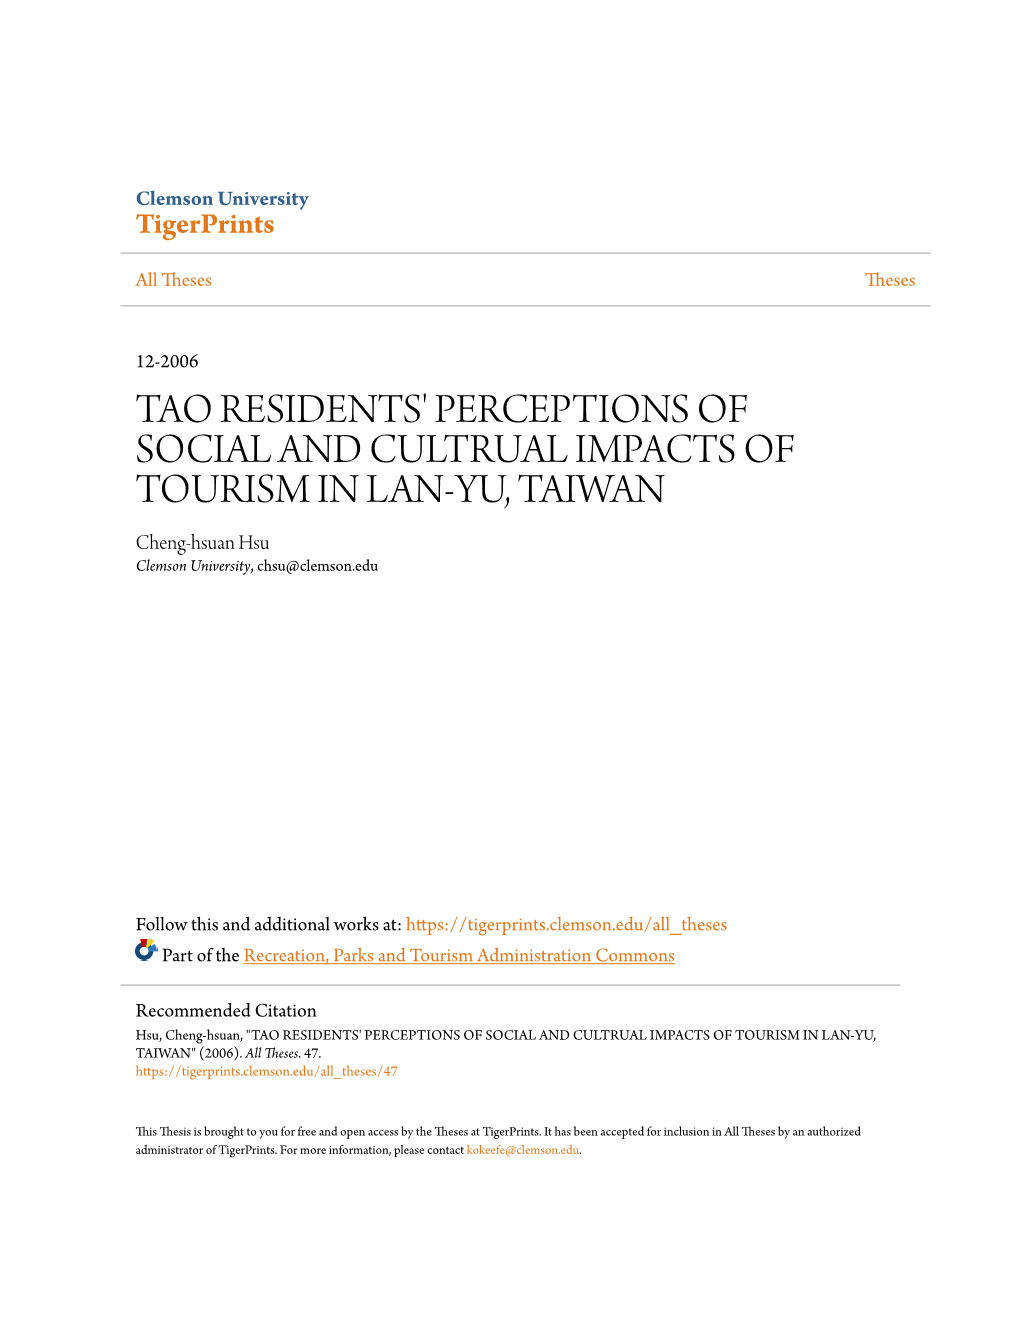 TAO RESIDENTS' PERCEPTIONS of SOCIAL and CULTRUAL IMPACTS of TOURISM in LAN-YU, TAIWAN Cheng-Hsuan Hsu Clemson University, Chsu@Clemson.Edu